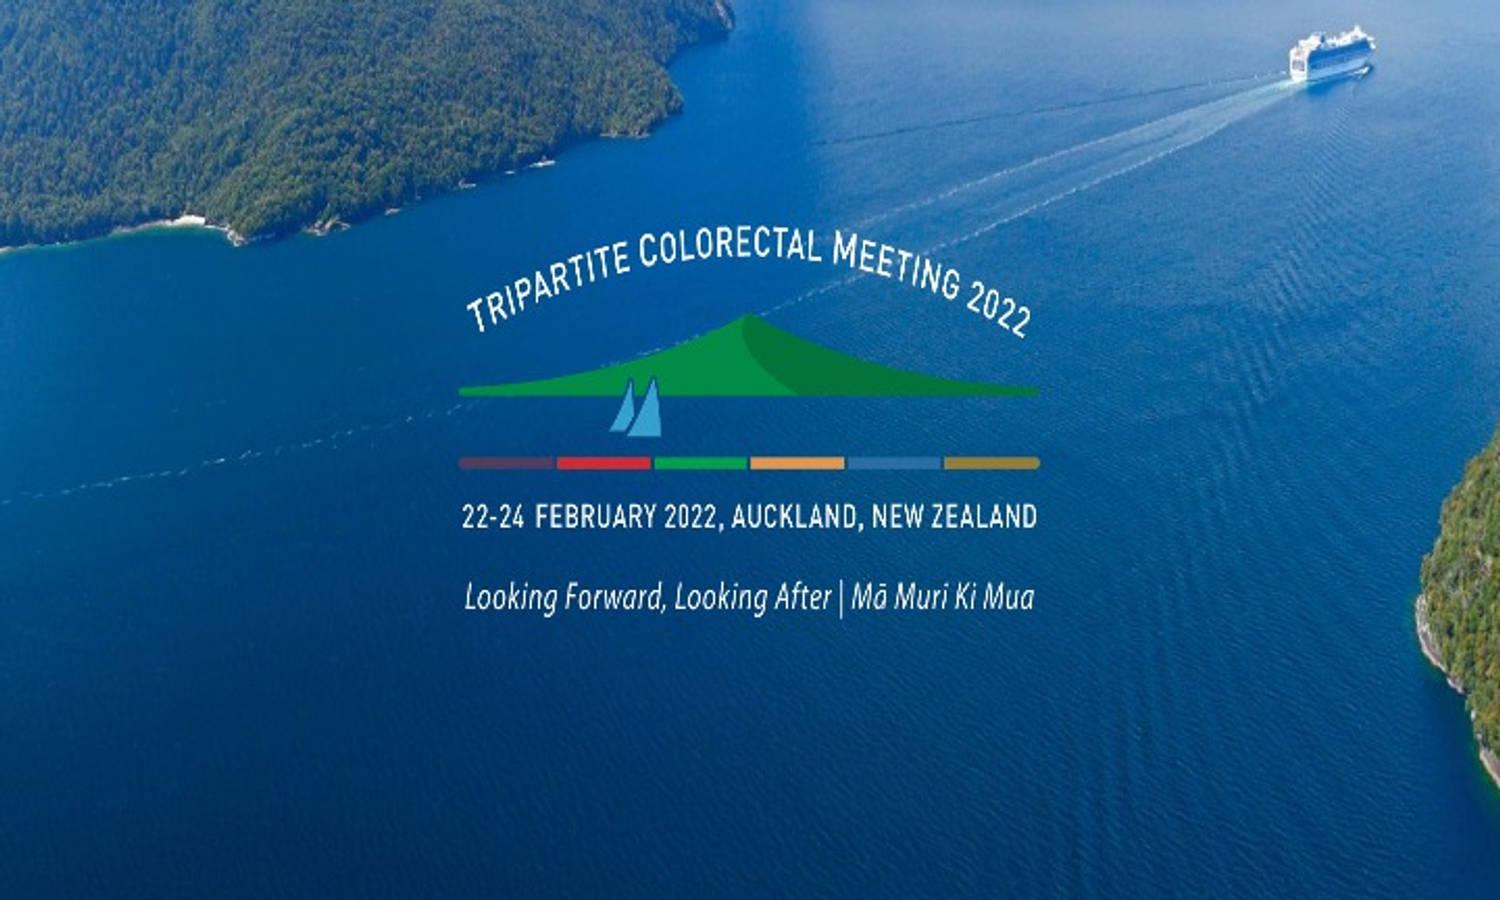 Tripartite Colorectal Meeting 2022